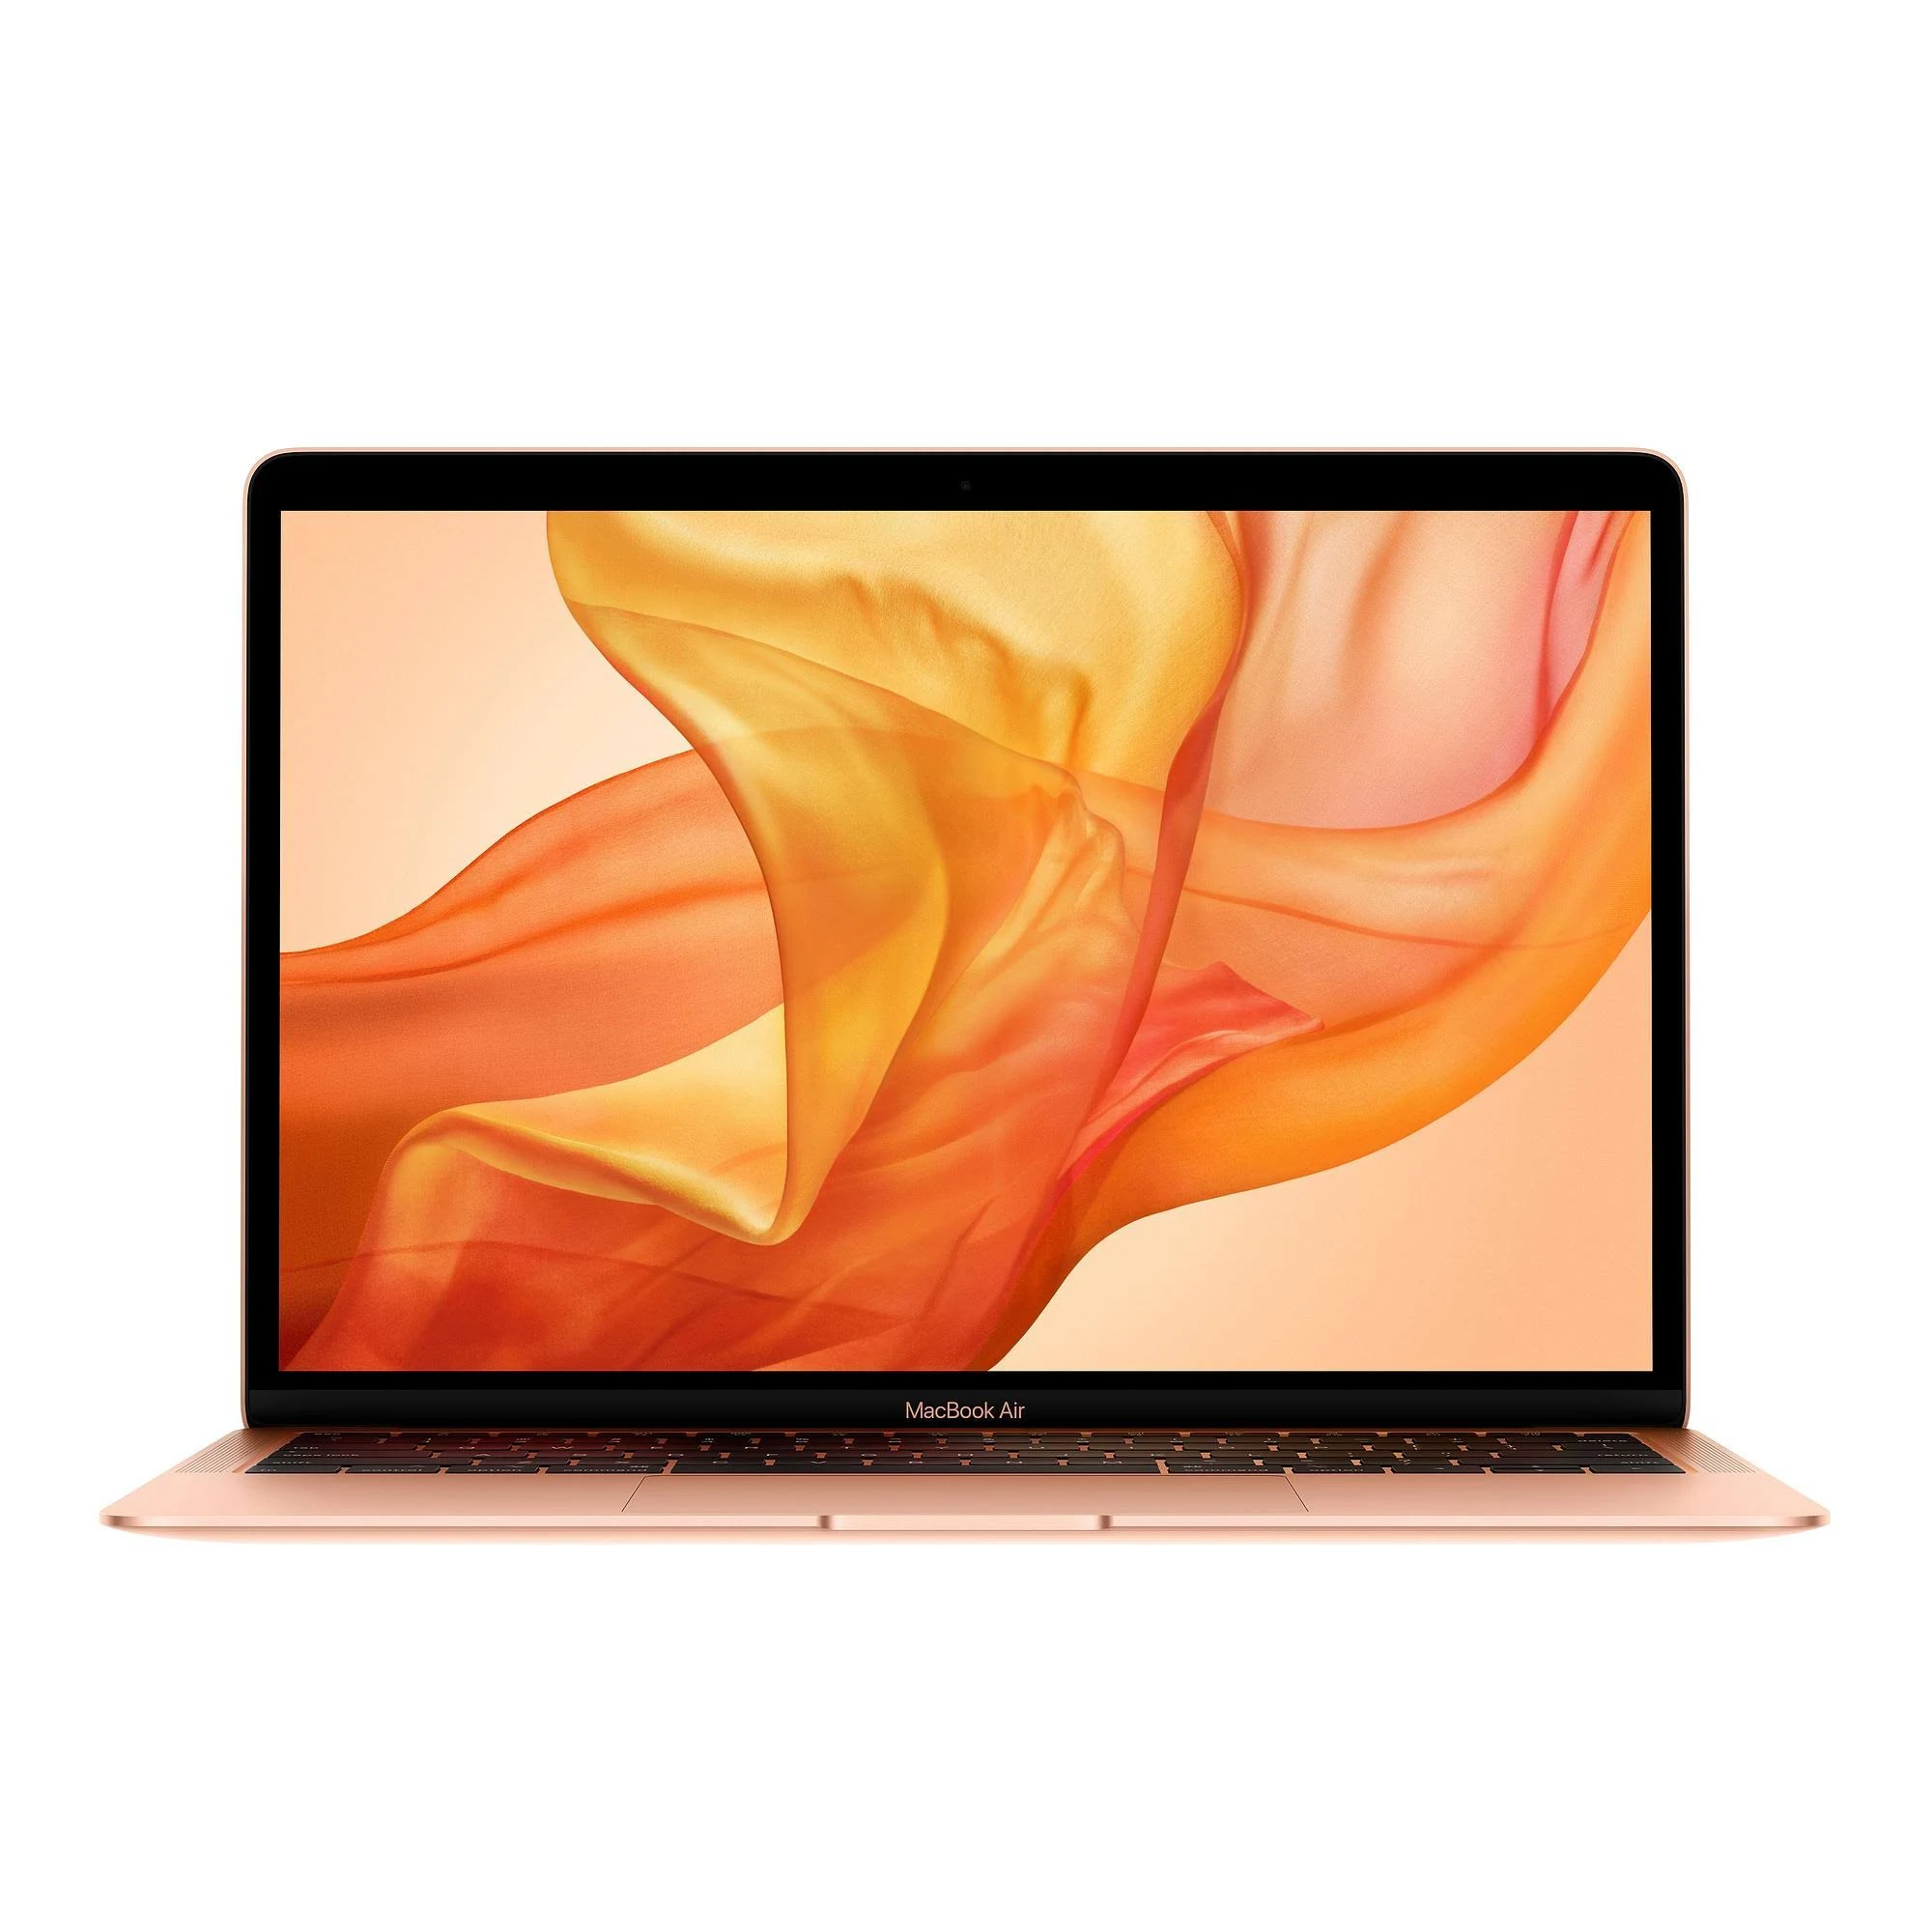 MacBook Air 13 inch True Tone 2019 i5 1.6GHz - 512GB SSD - 16GB Ram 512GB Gold Very Good